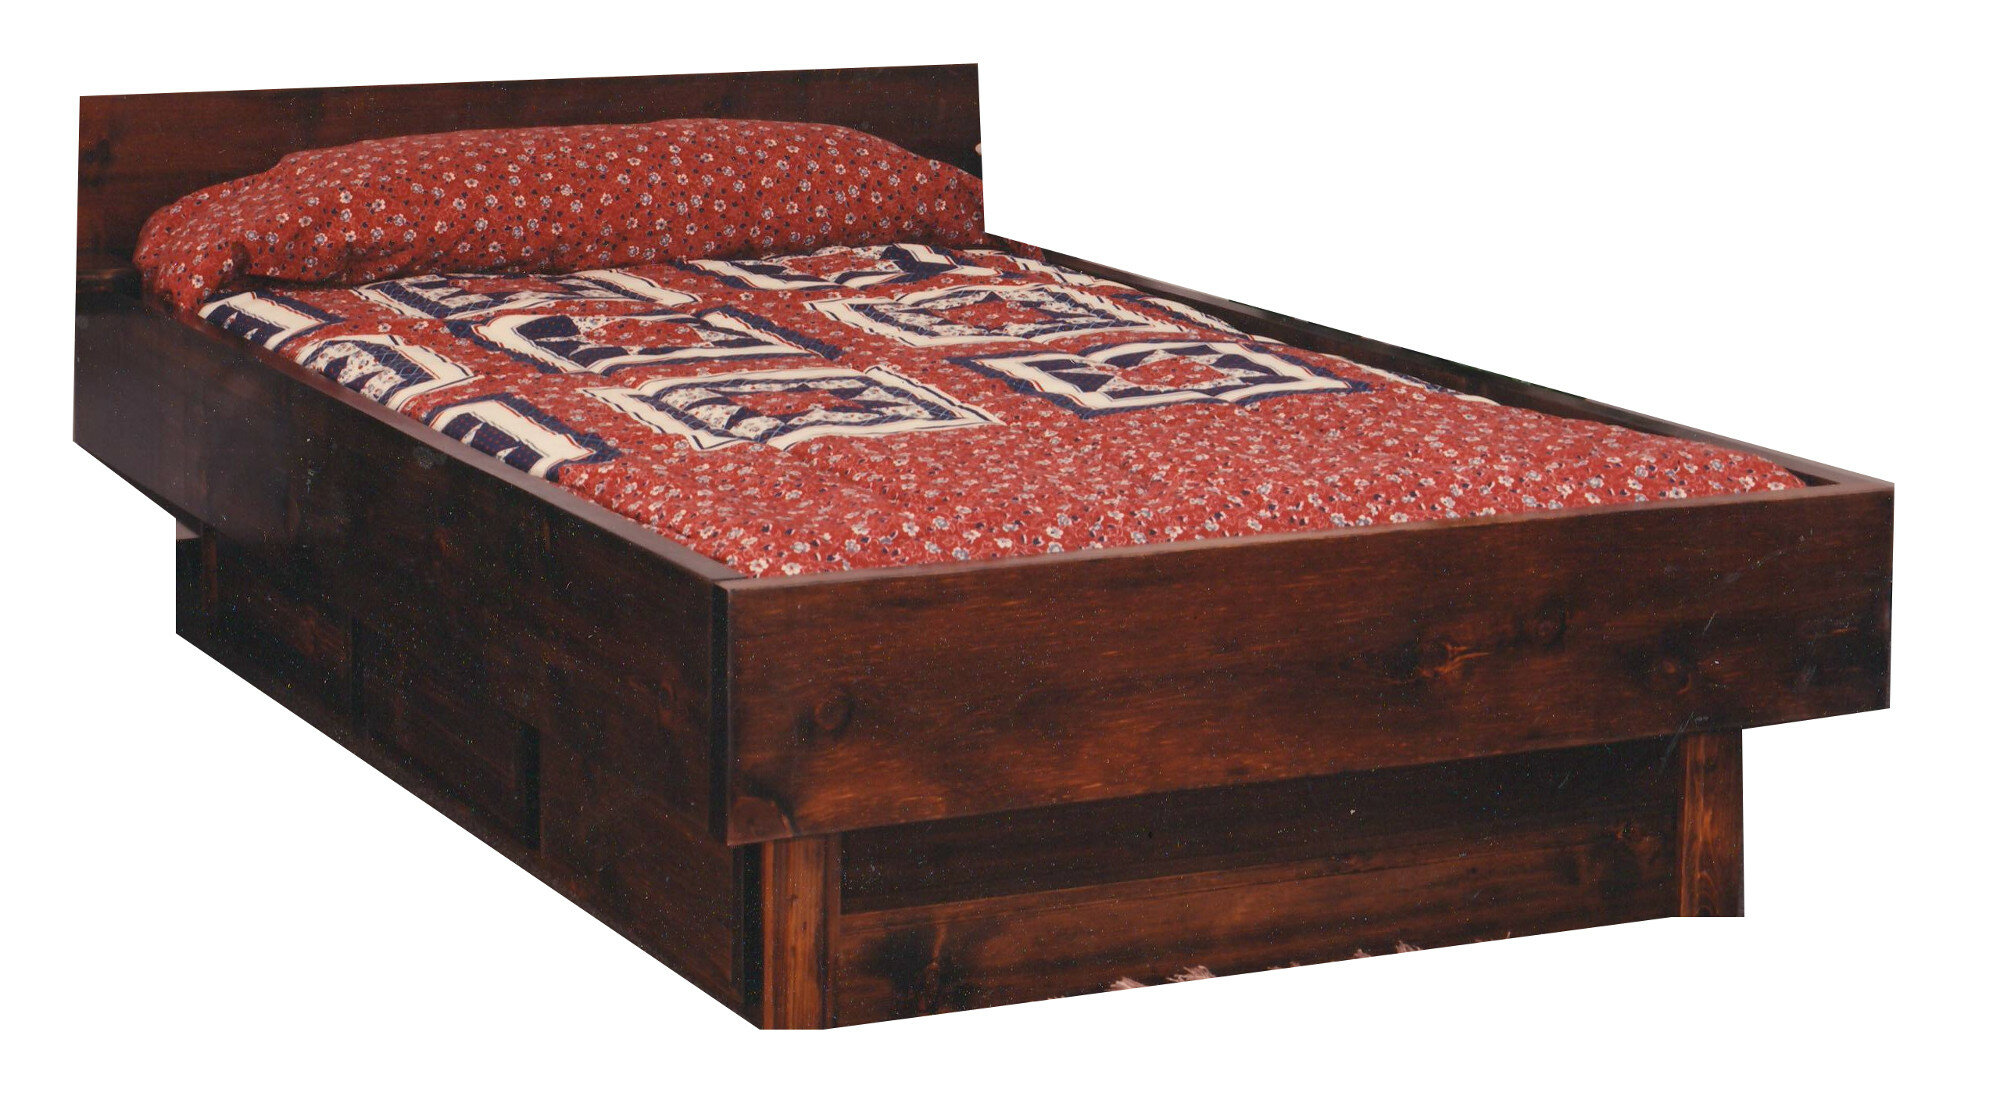 waterbed mattresses for sale in dallas tx